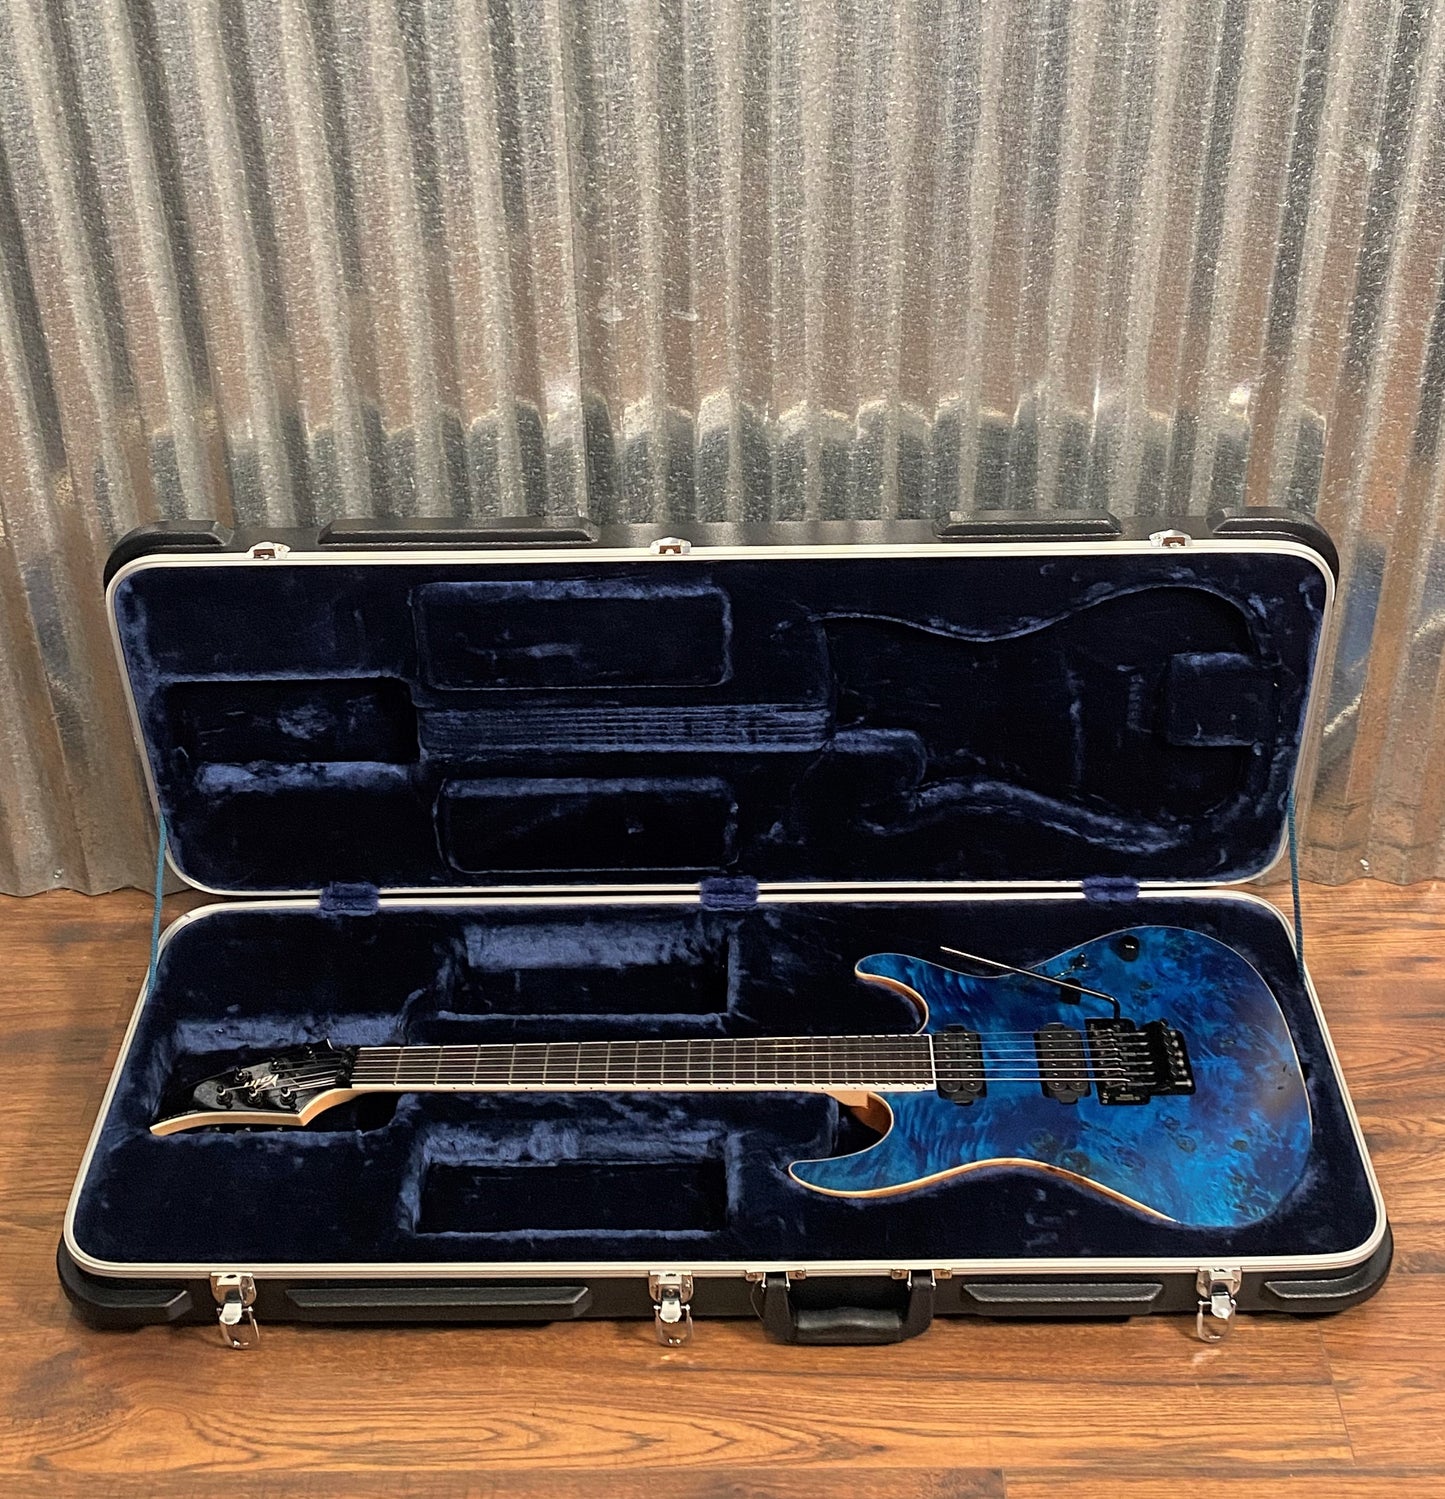 Vola Ares FR BM Tribal Blue Burl Satin Guitar & Case #3428